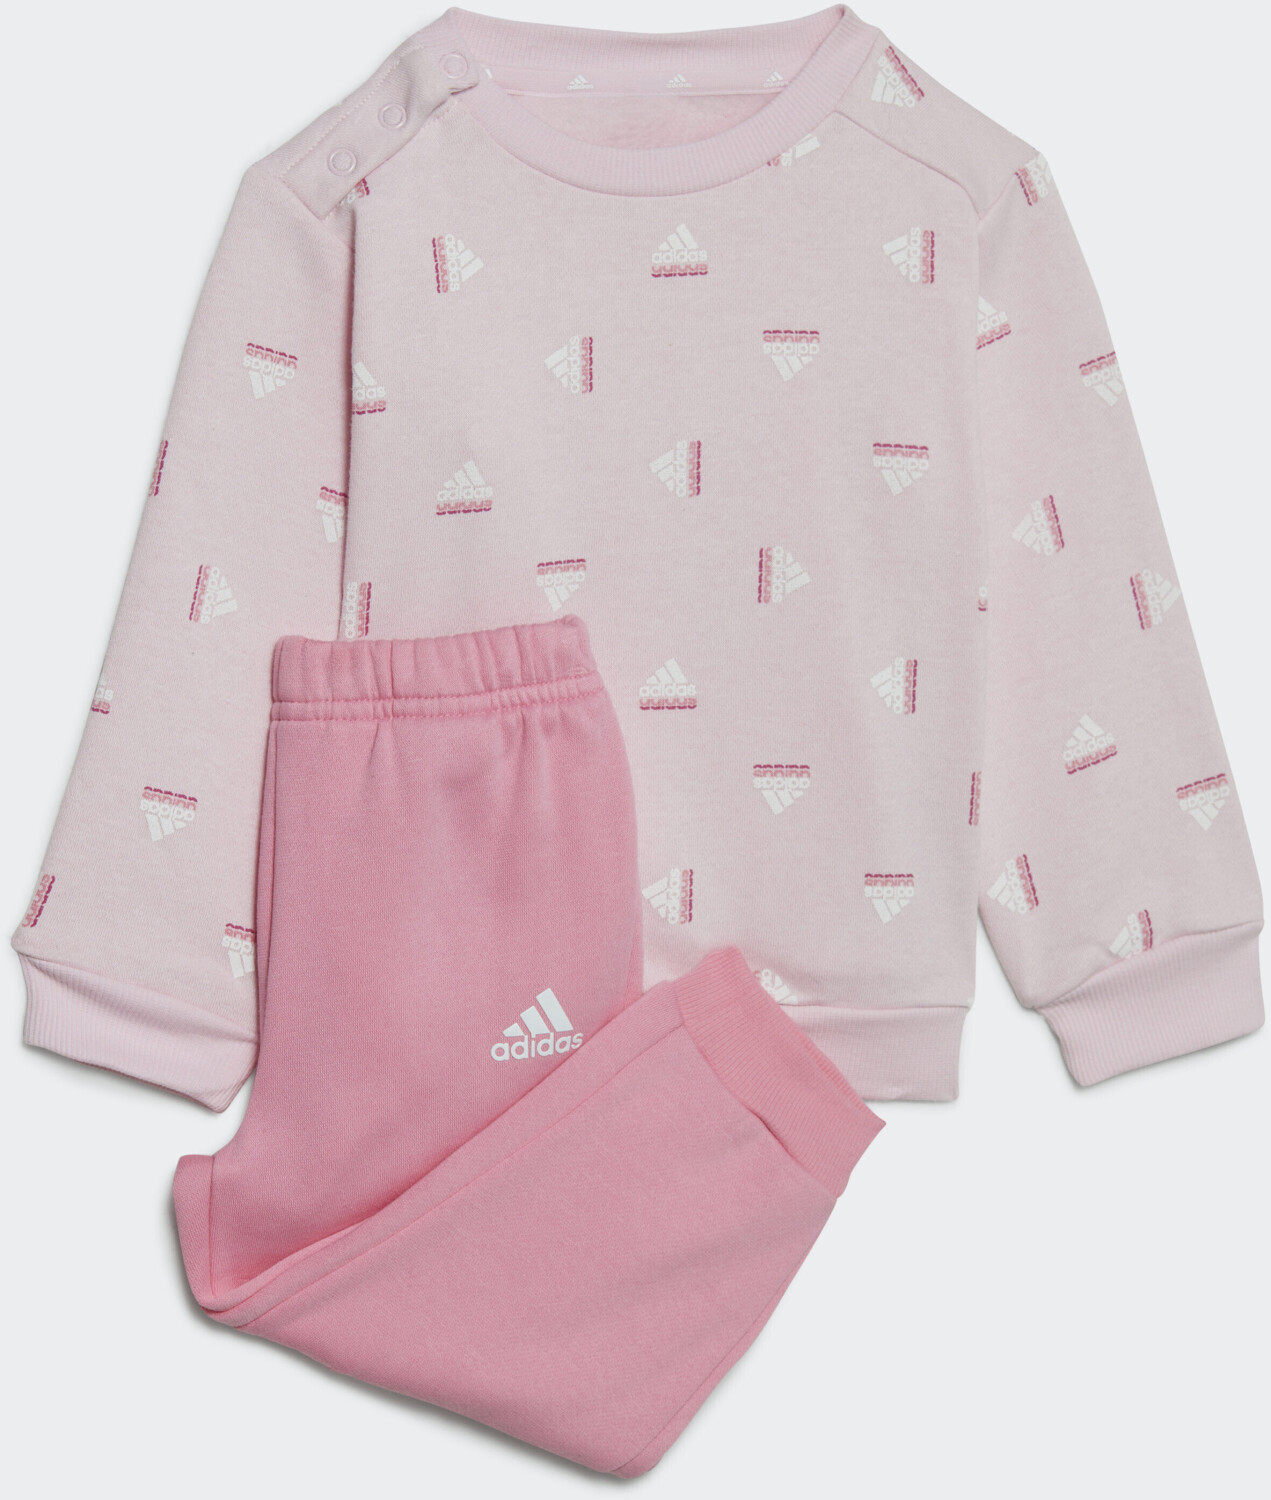 Adidas Kids Brand Love Fleece Jogginganzug Clear pink/white (IC0452) ab  30,19 € | Preisvergleich bei